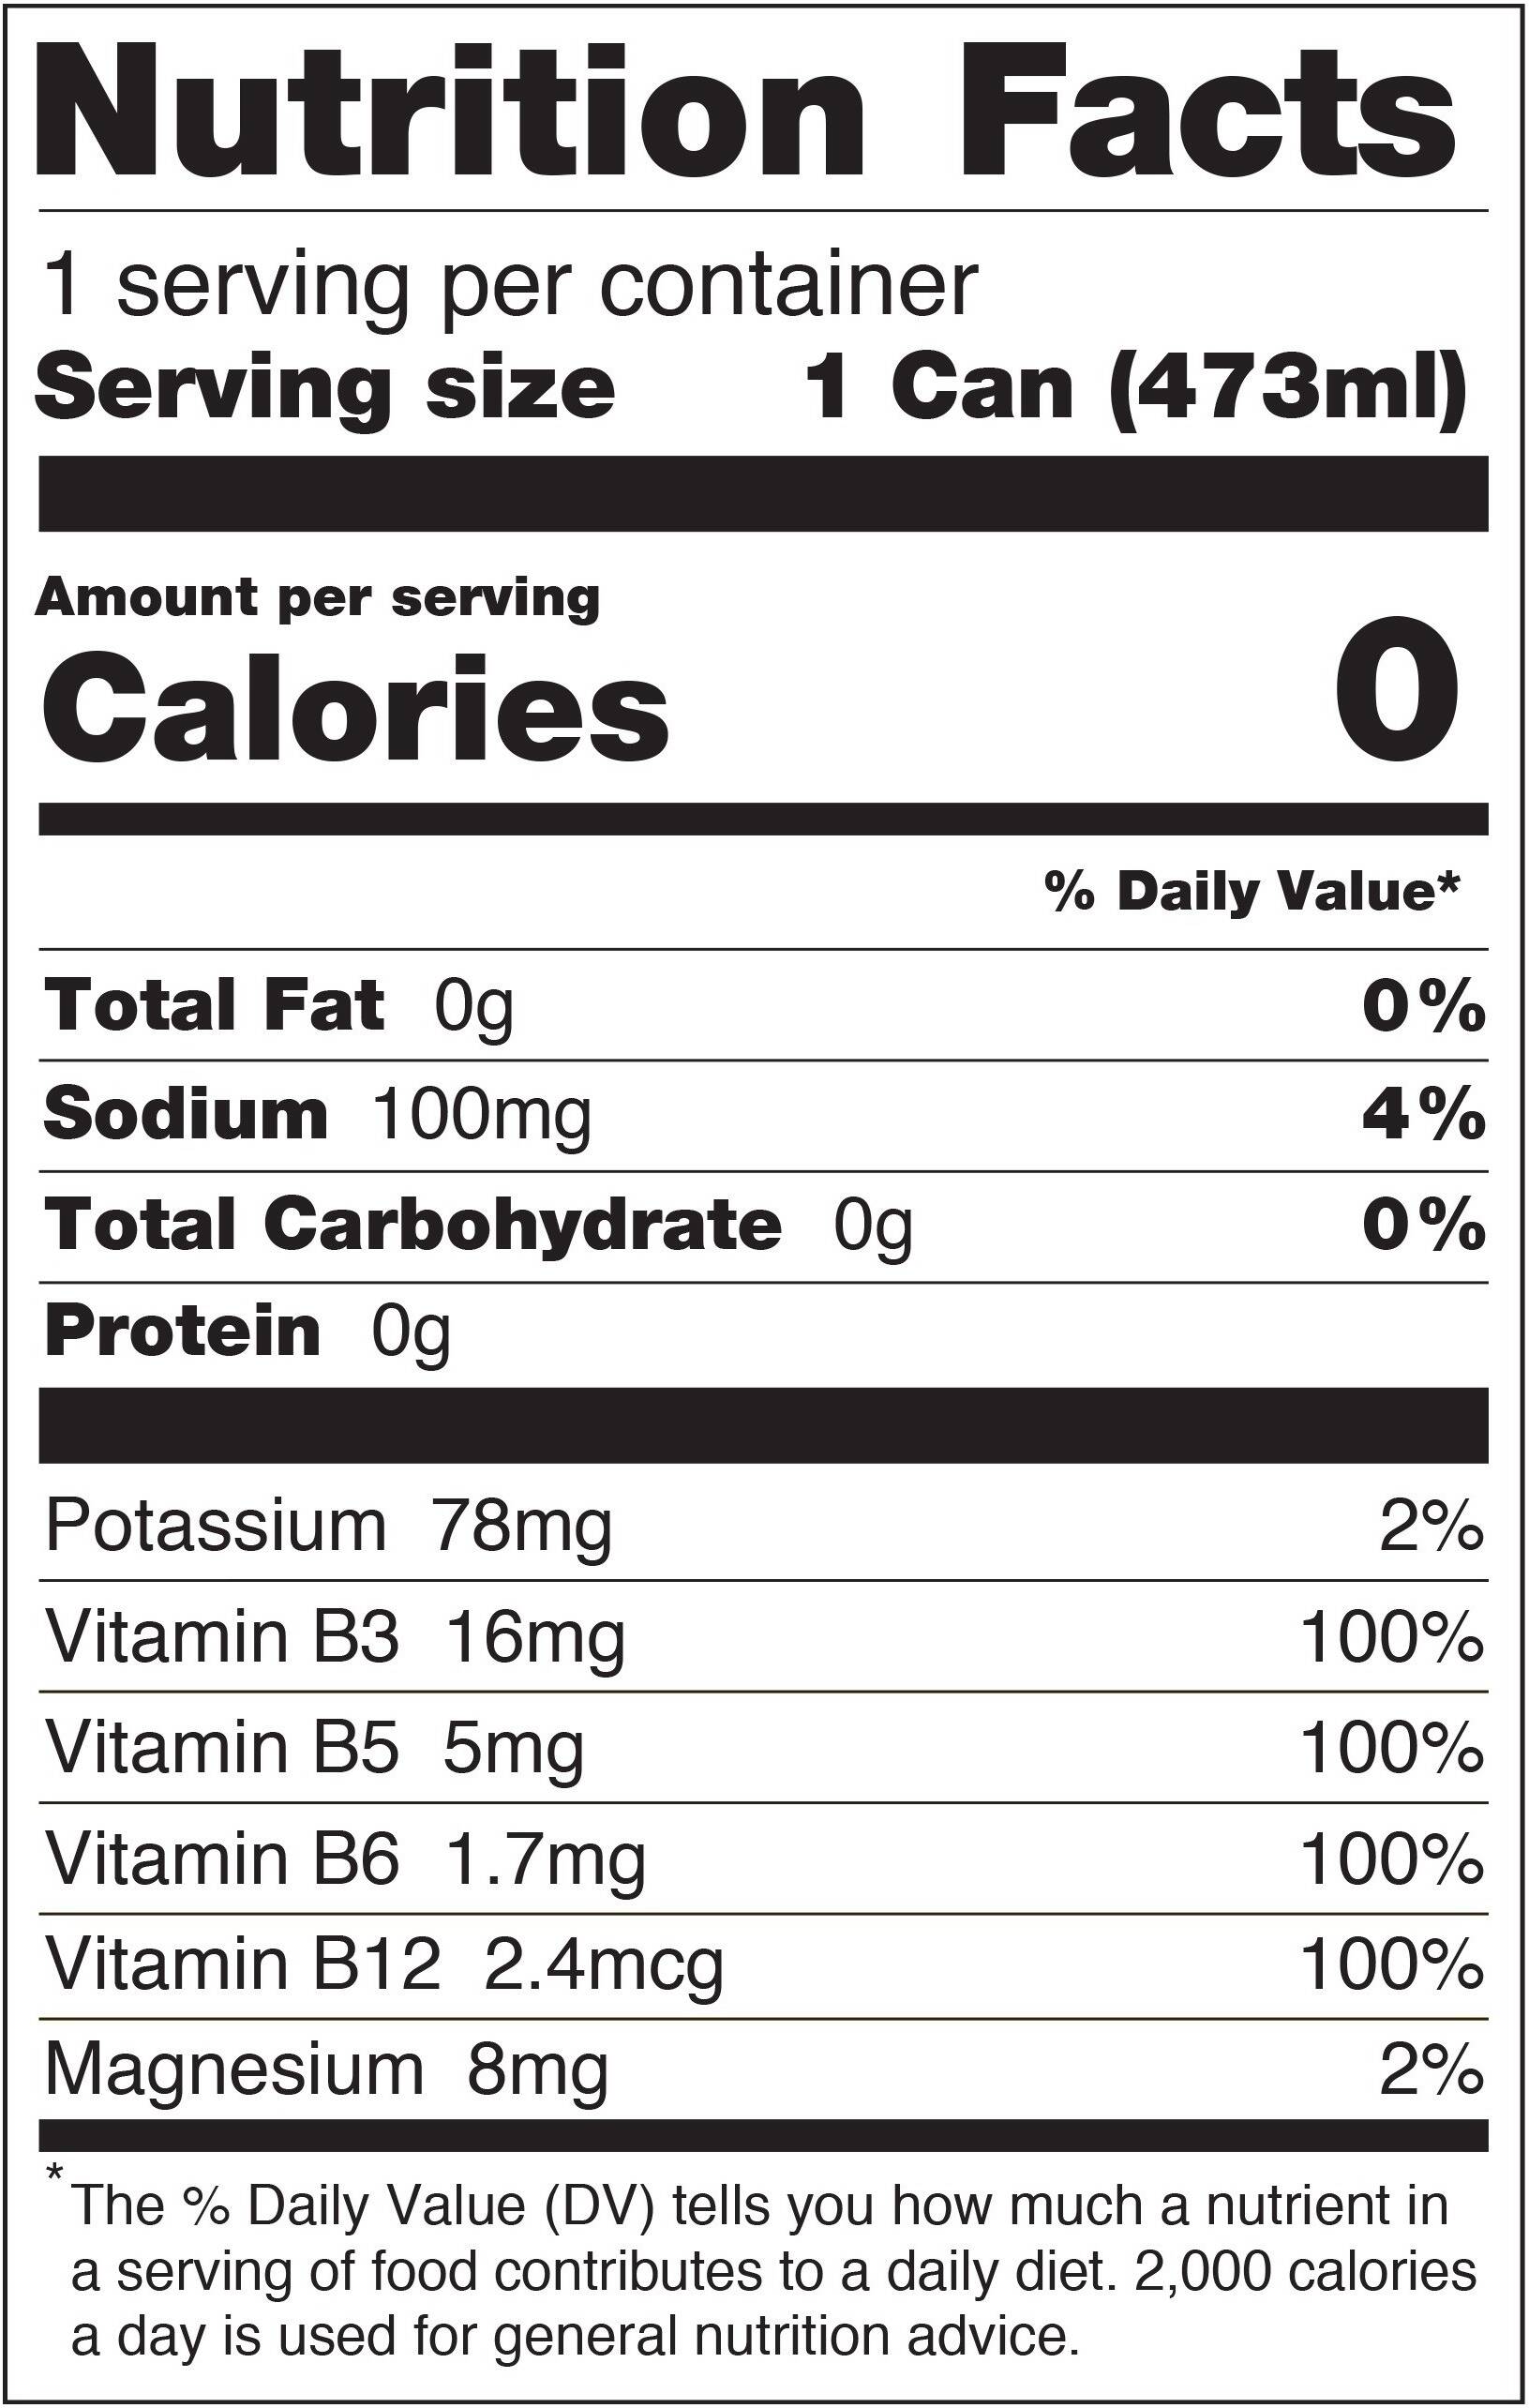 Image describing nutrition information for product Rockstar Xdurance Peach Ice Tea